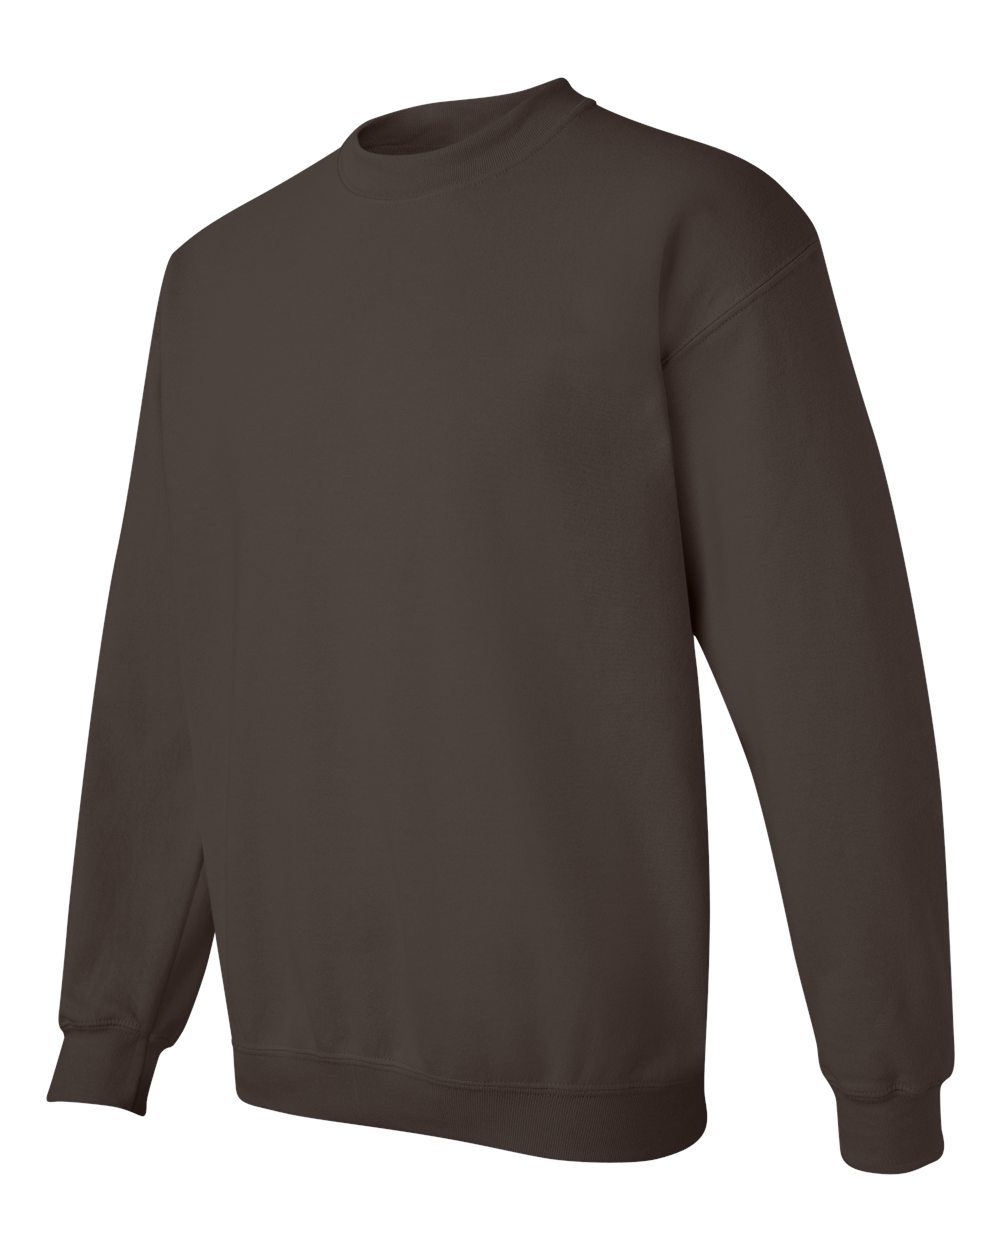 Gildan Heavy Blend Crew Neck sweater GI18000 Dark Chocolate